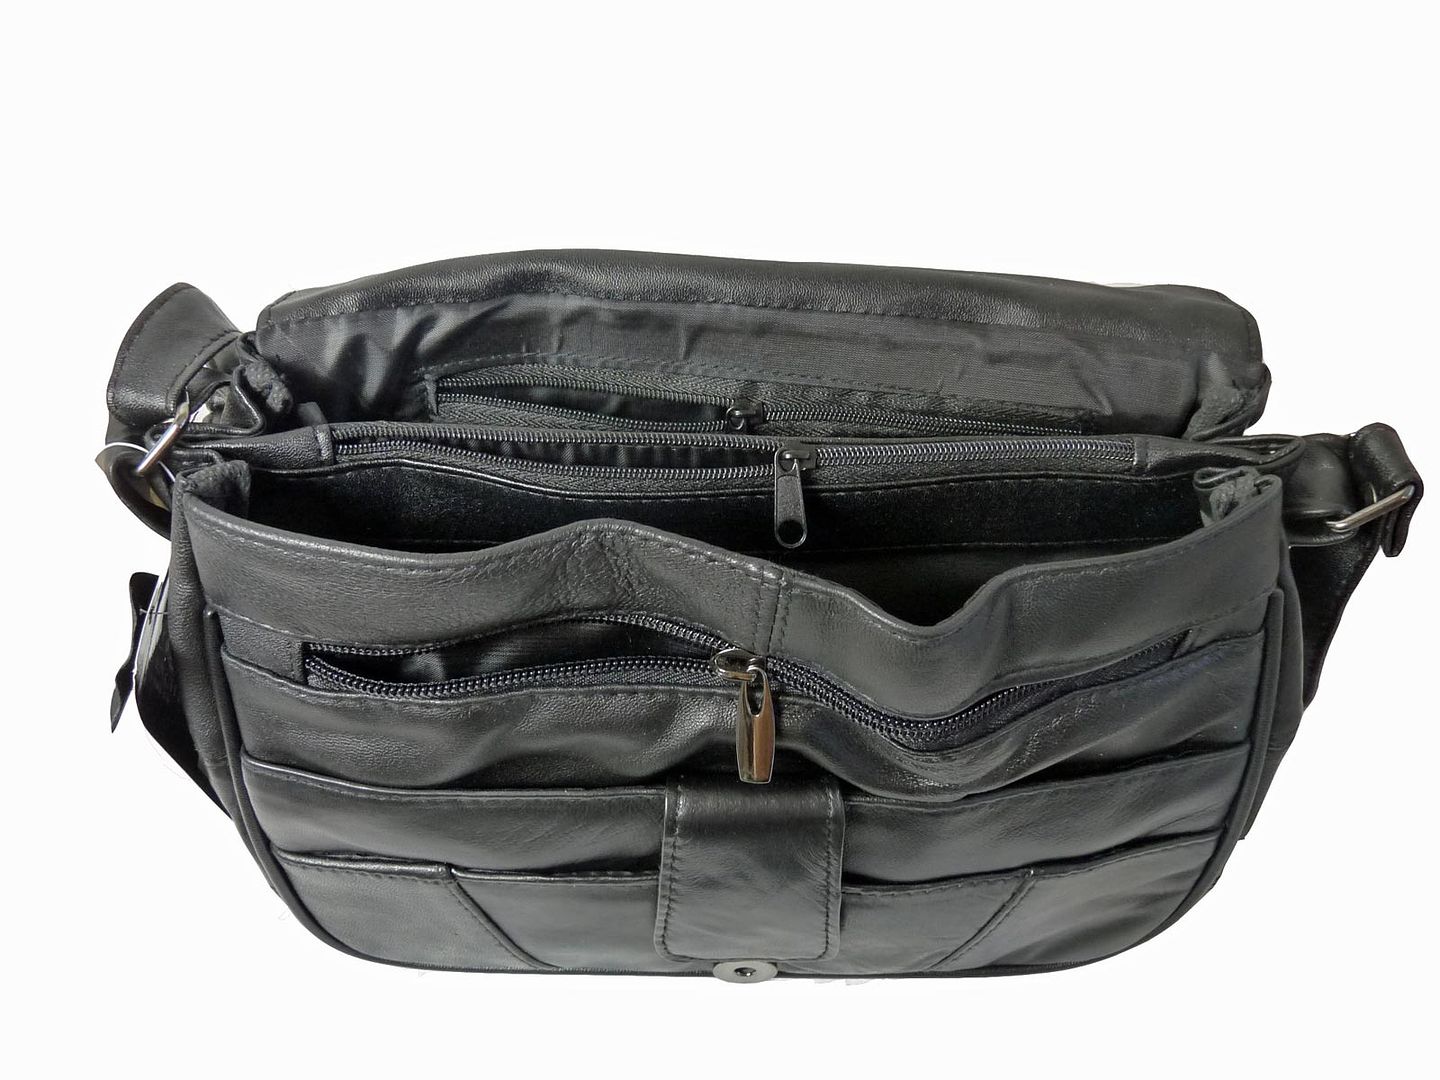 Ladies Womens Cross Body HandBag Black Real Leather Shoulder Hand Bag Bags QL966 | eBay